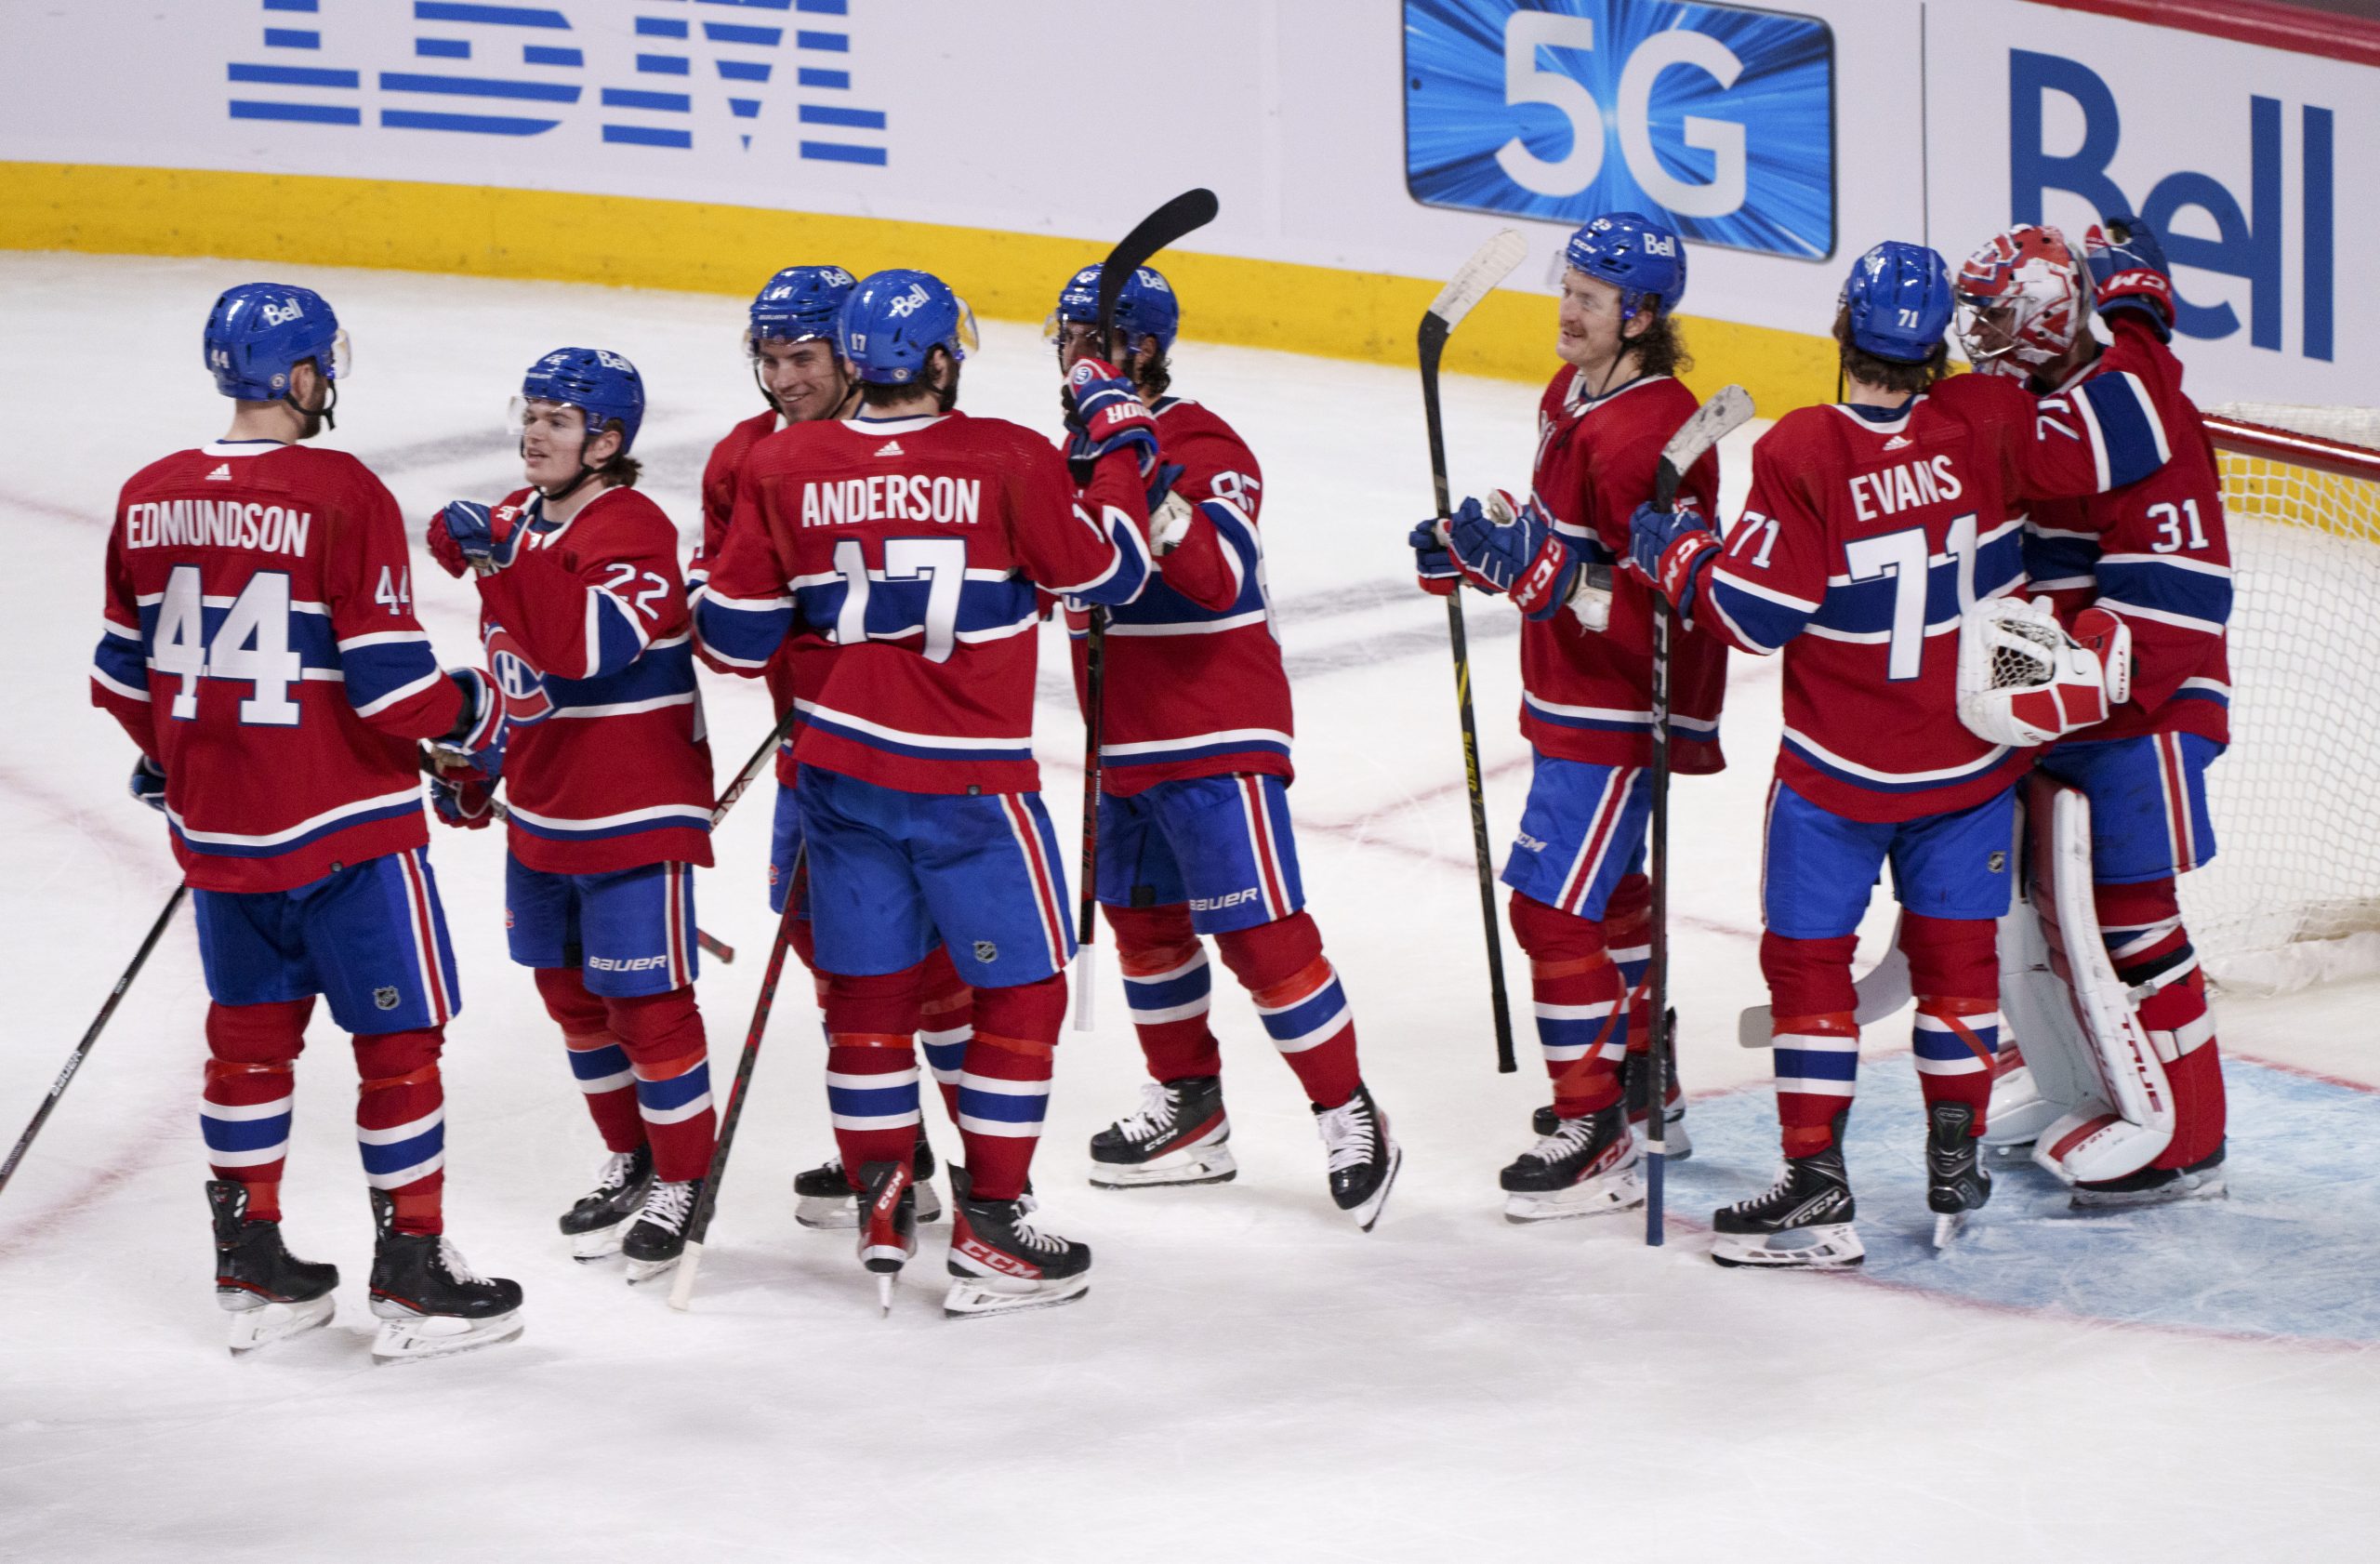 Nick Suzuki Montreal Canadiens Jerseys, Canadiens Jersey Deals